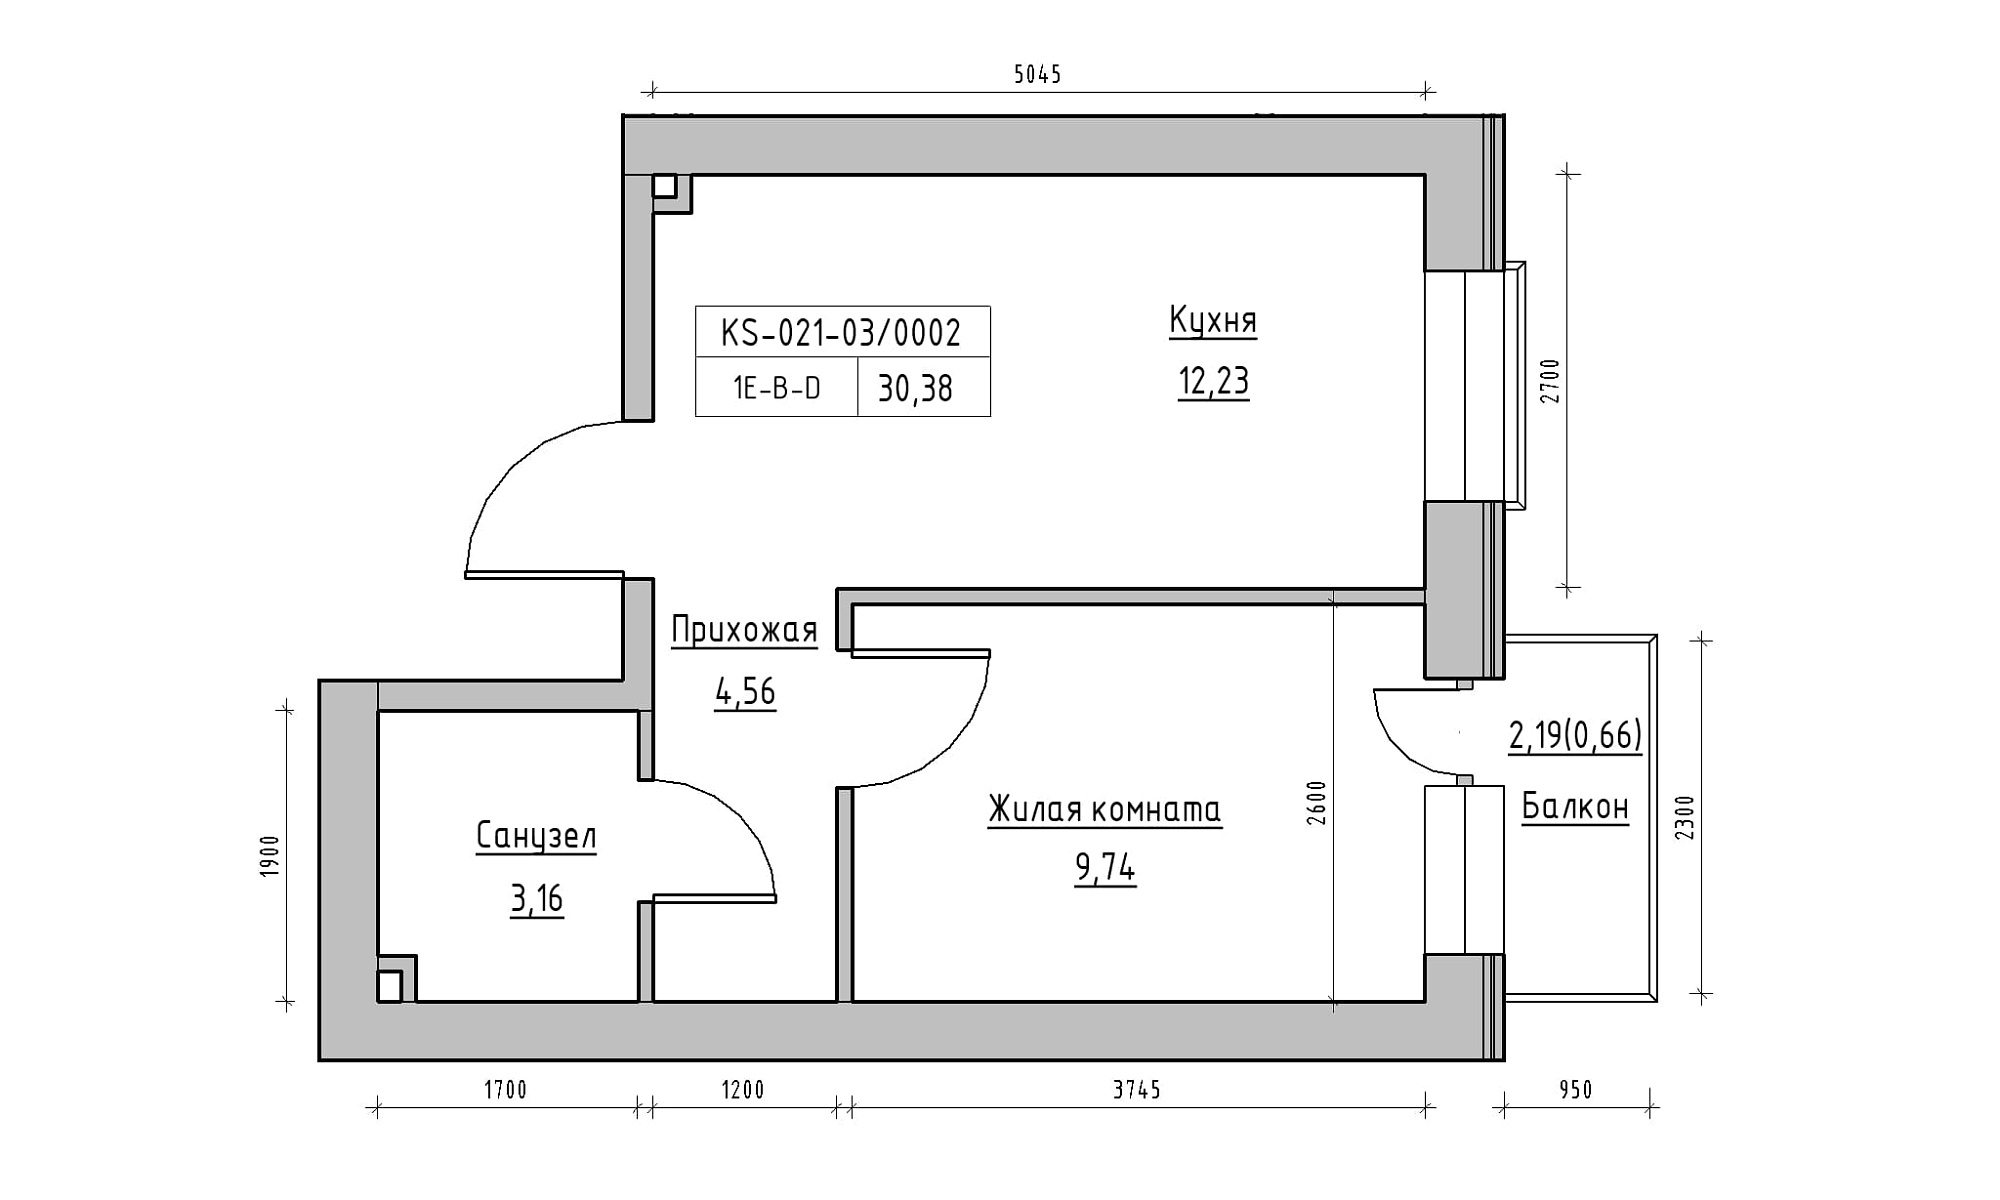 Planning 1-rm flats area 30.38m2, KS-021-03/0002.